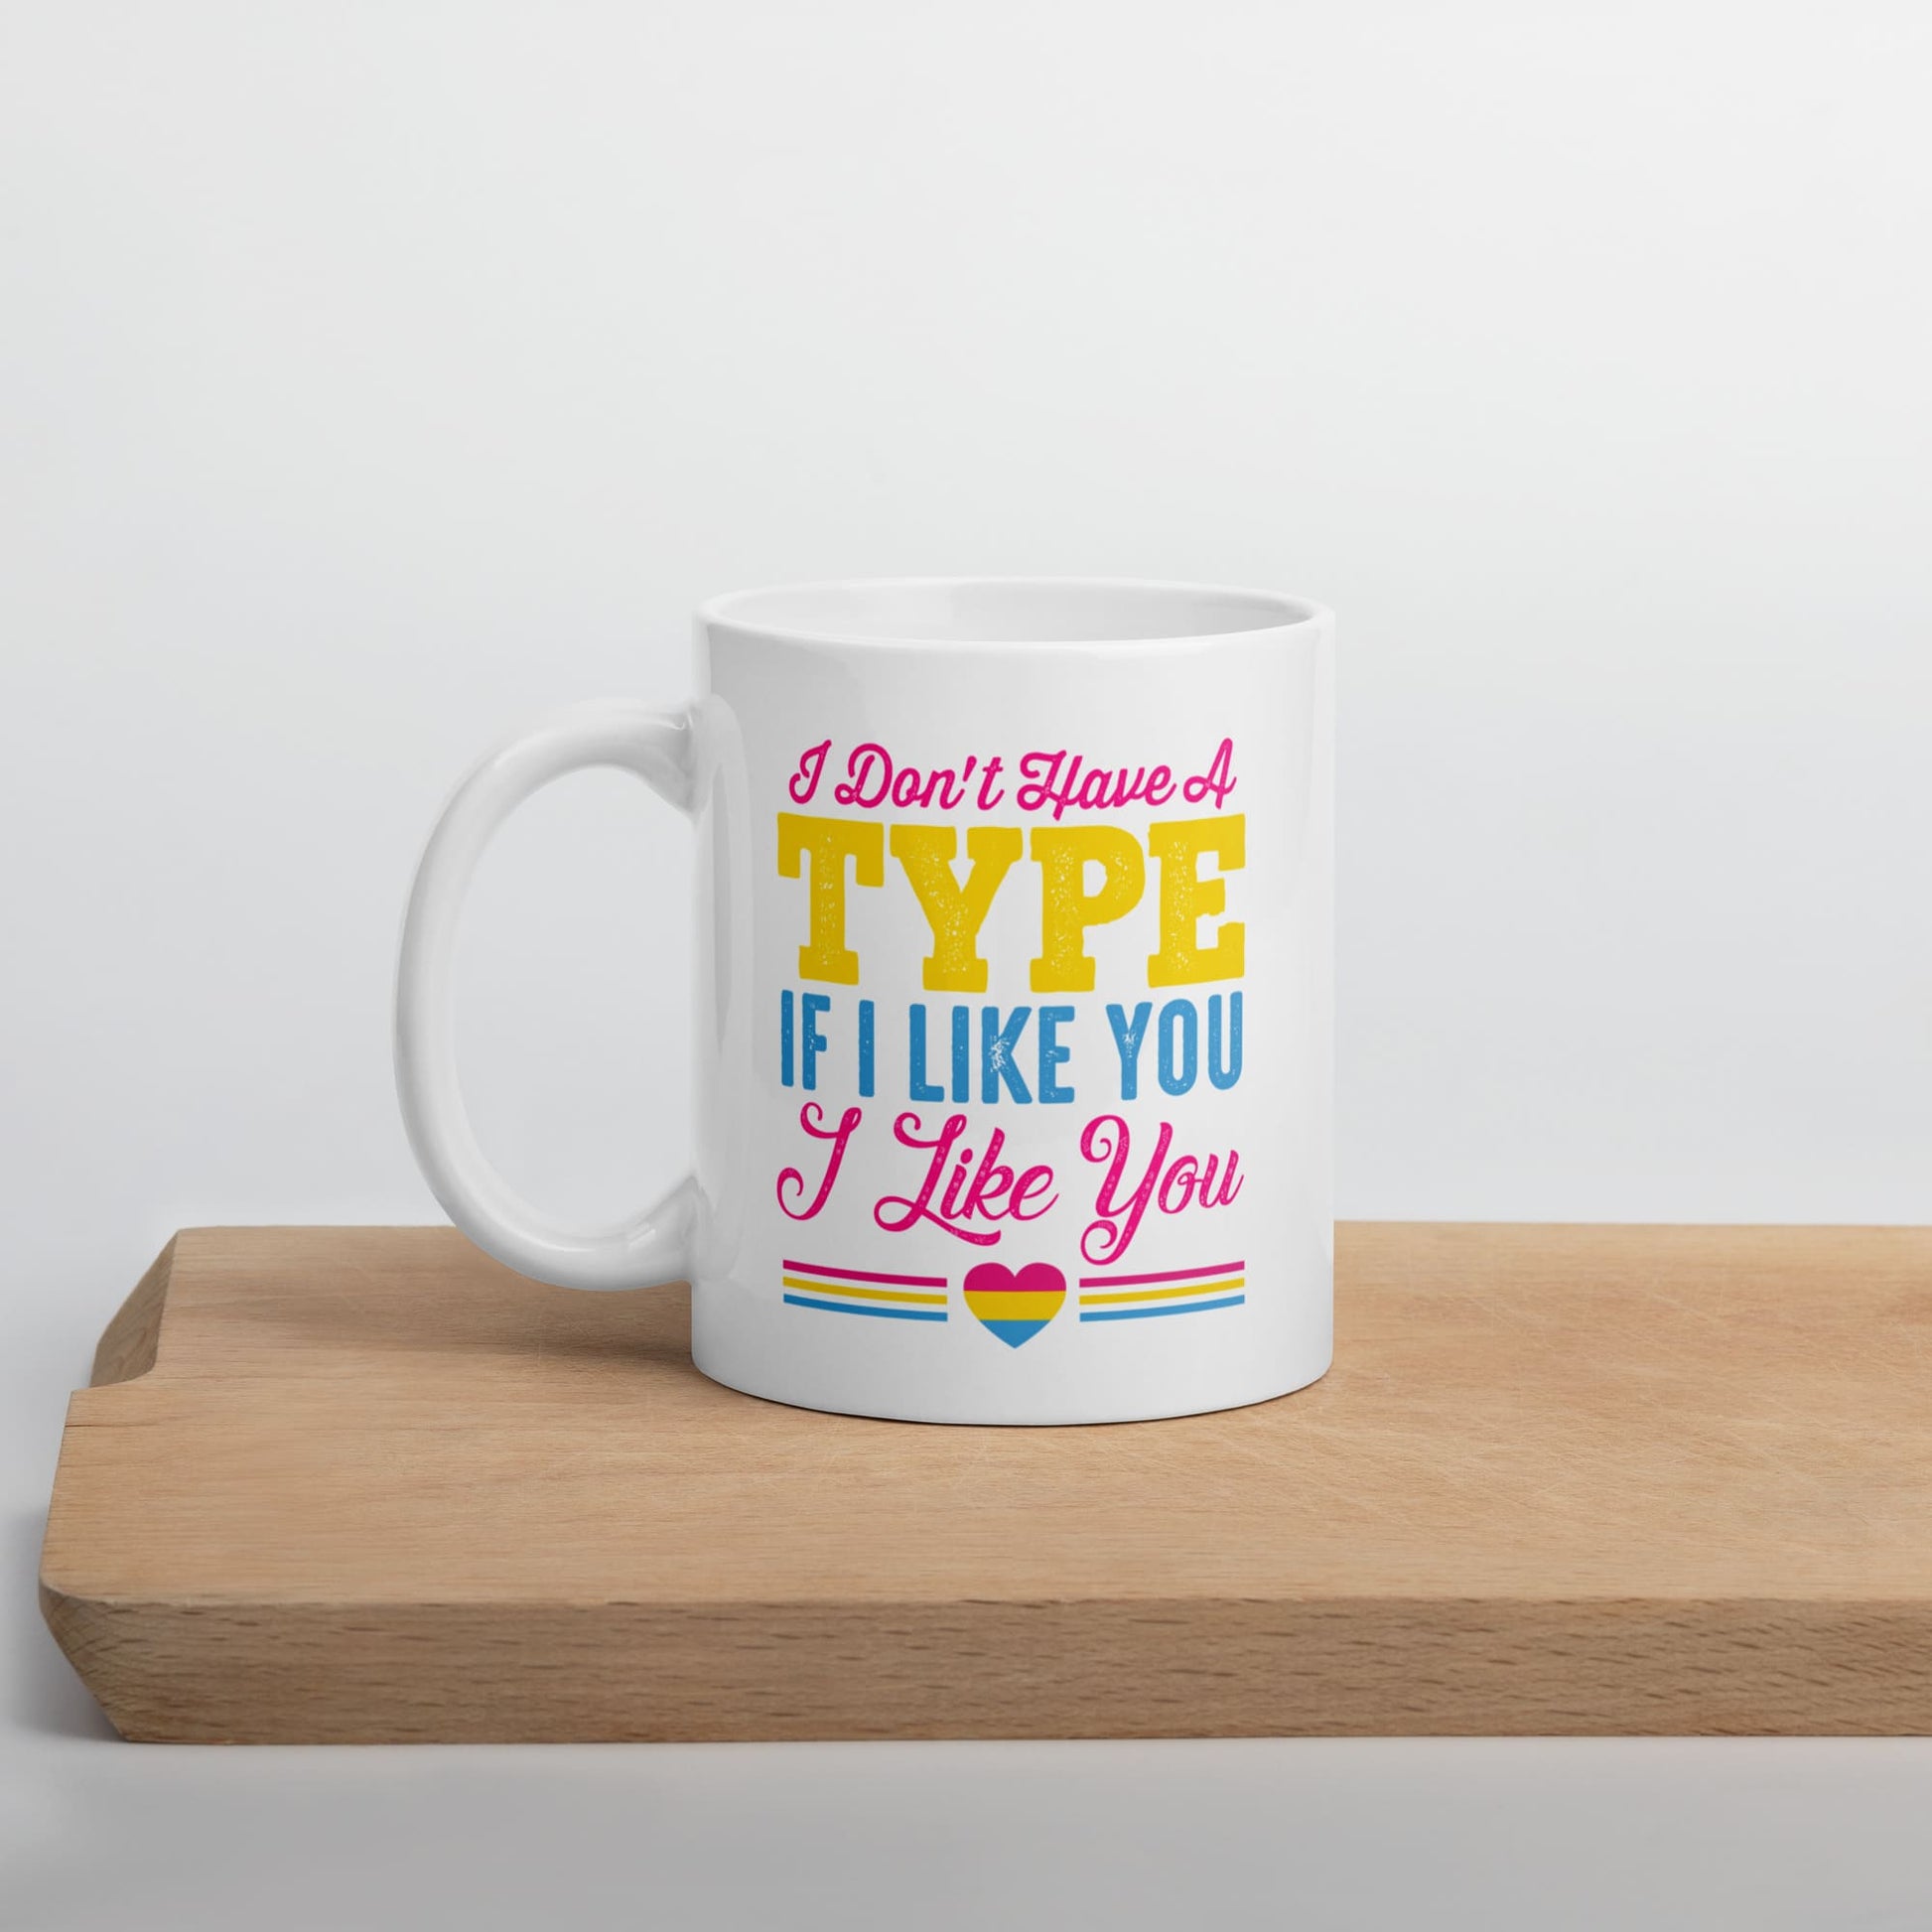 pansexual mug, funny pan pride coffee or tea cup on table